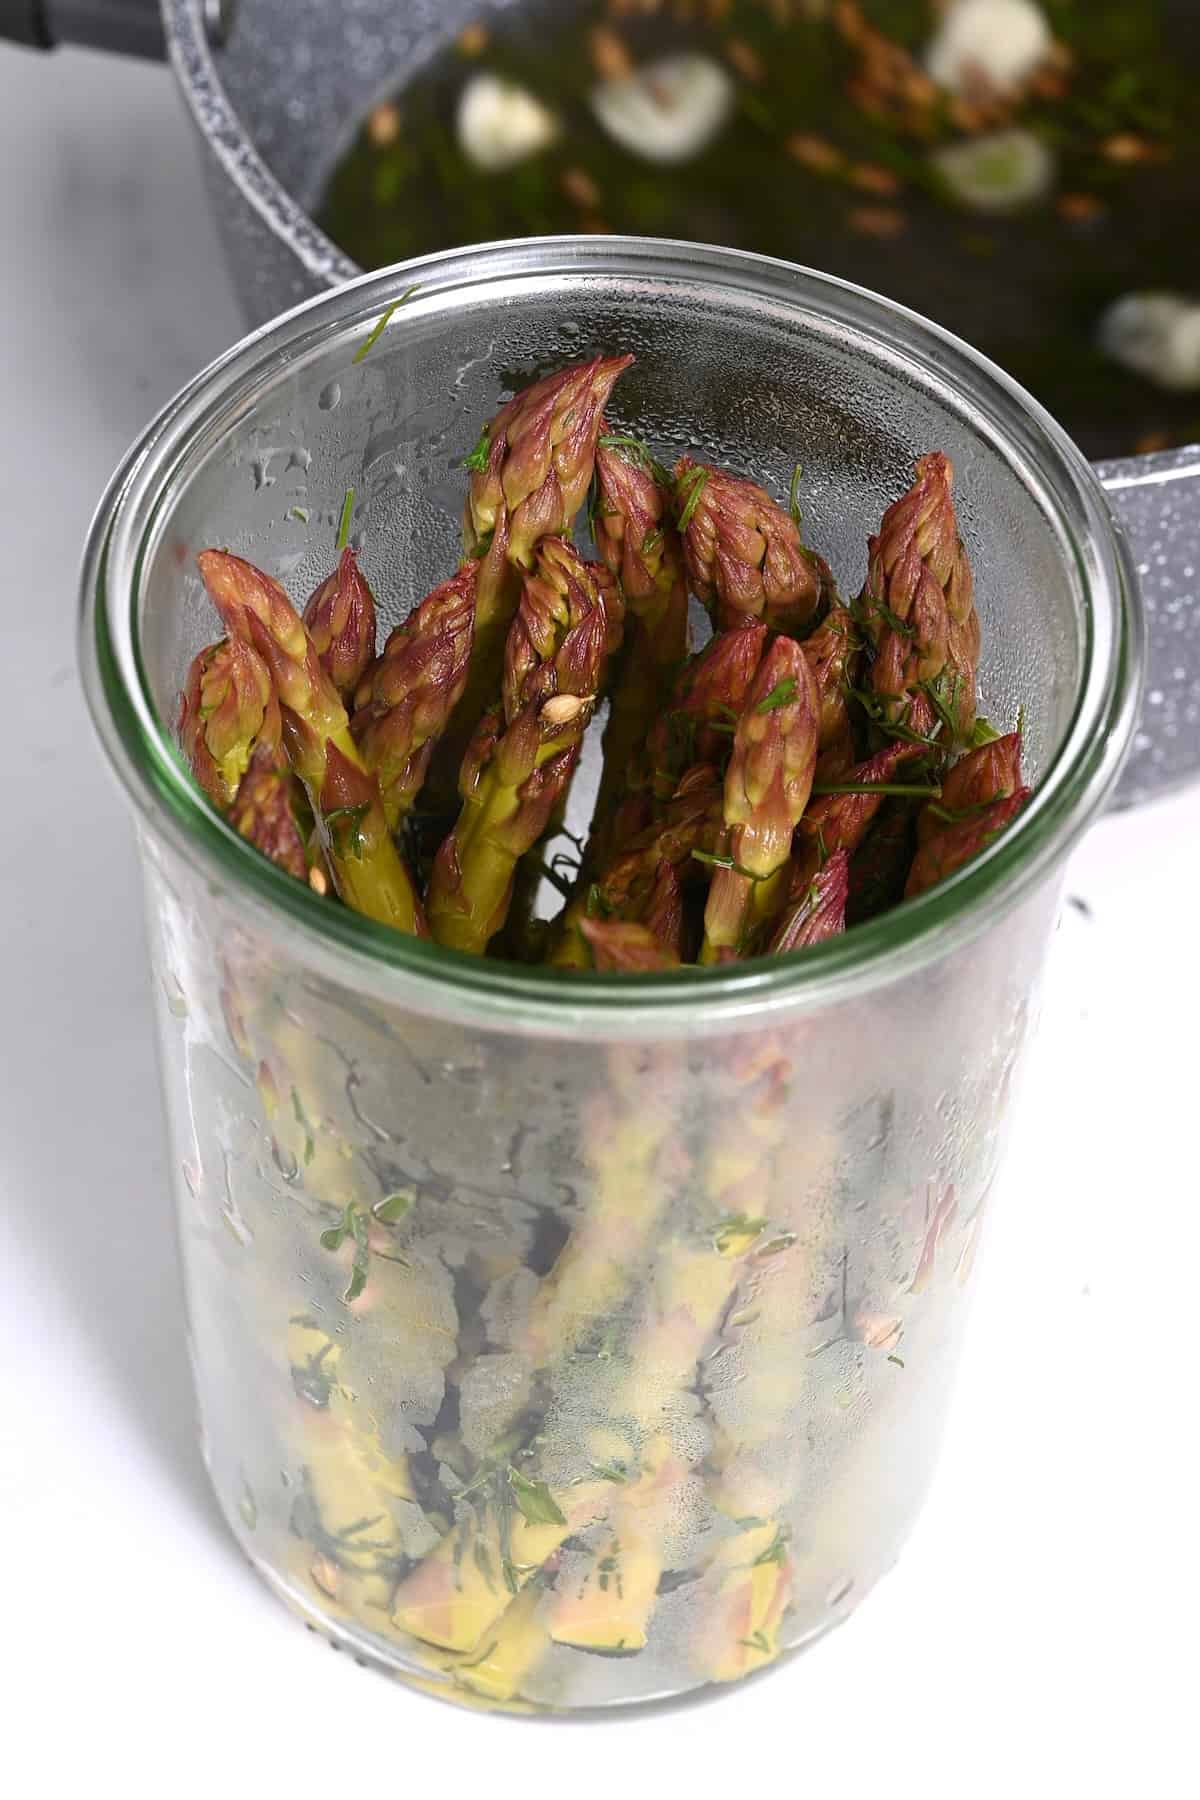 Asparagus placed in a jar